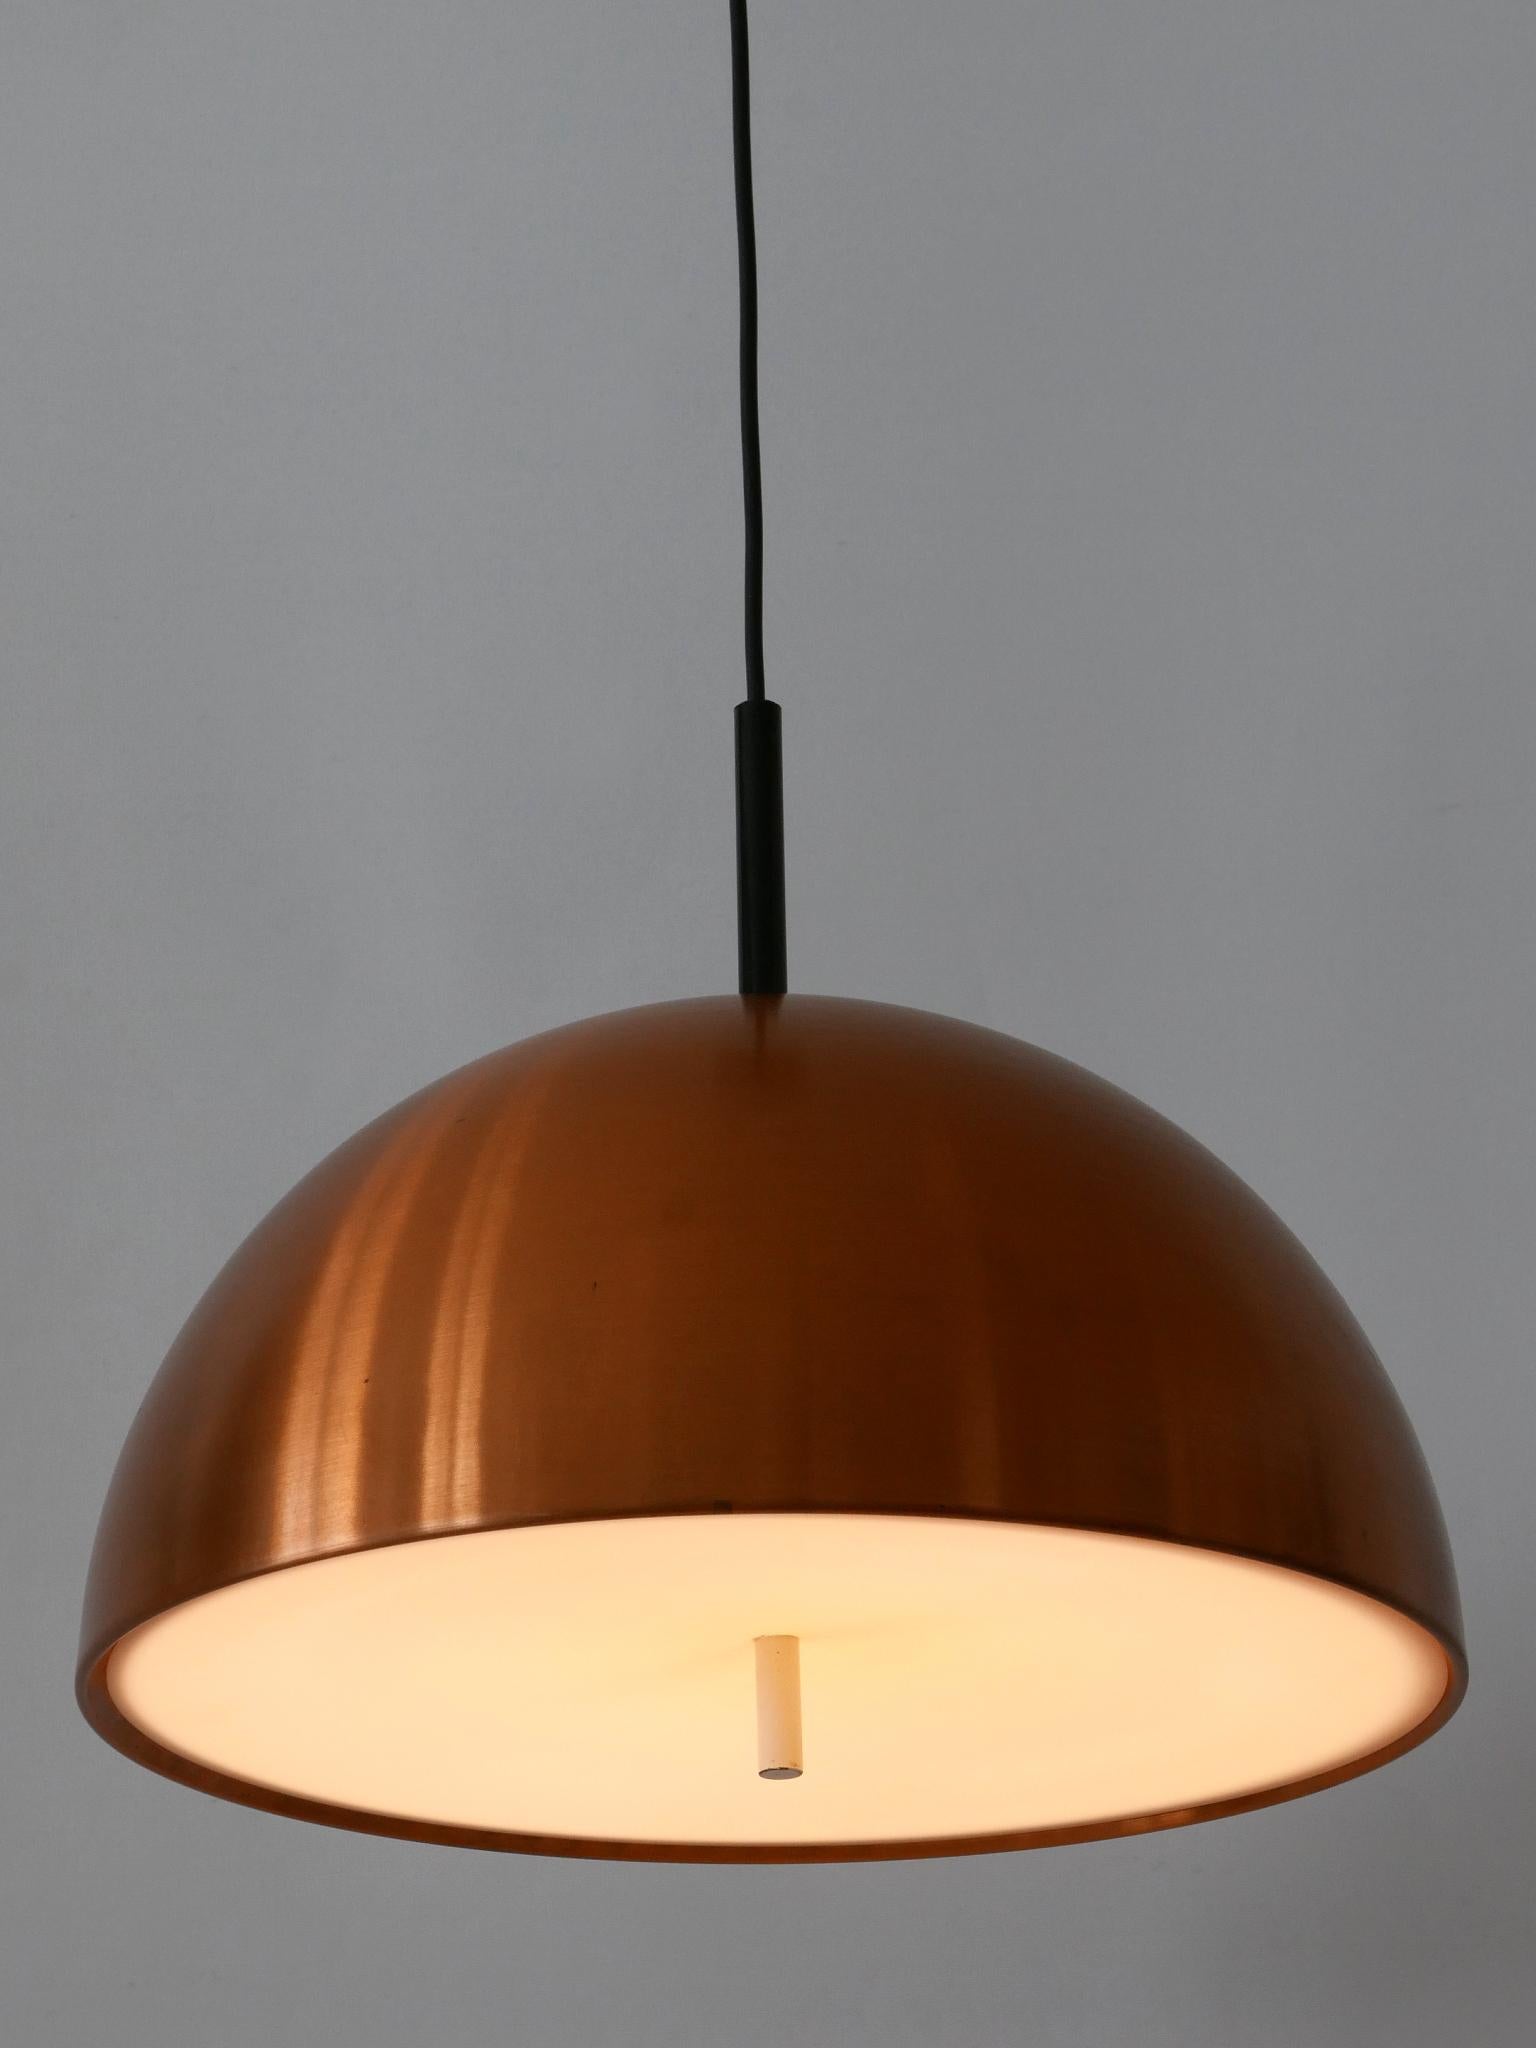 Elegant Mid-Century Modern Copper Pendant Lamp by Staff & Schwarz Germany 1960s For Sale 3